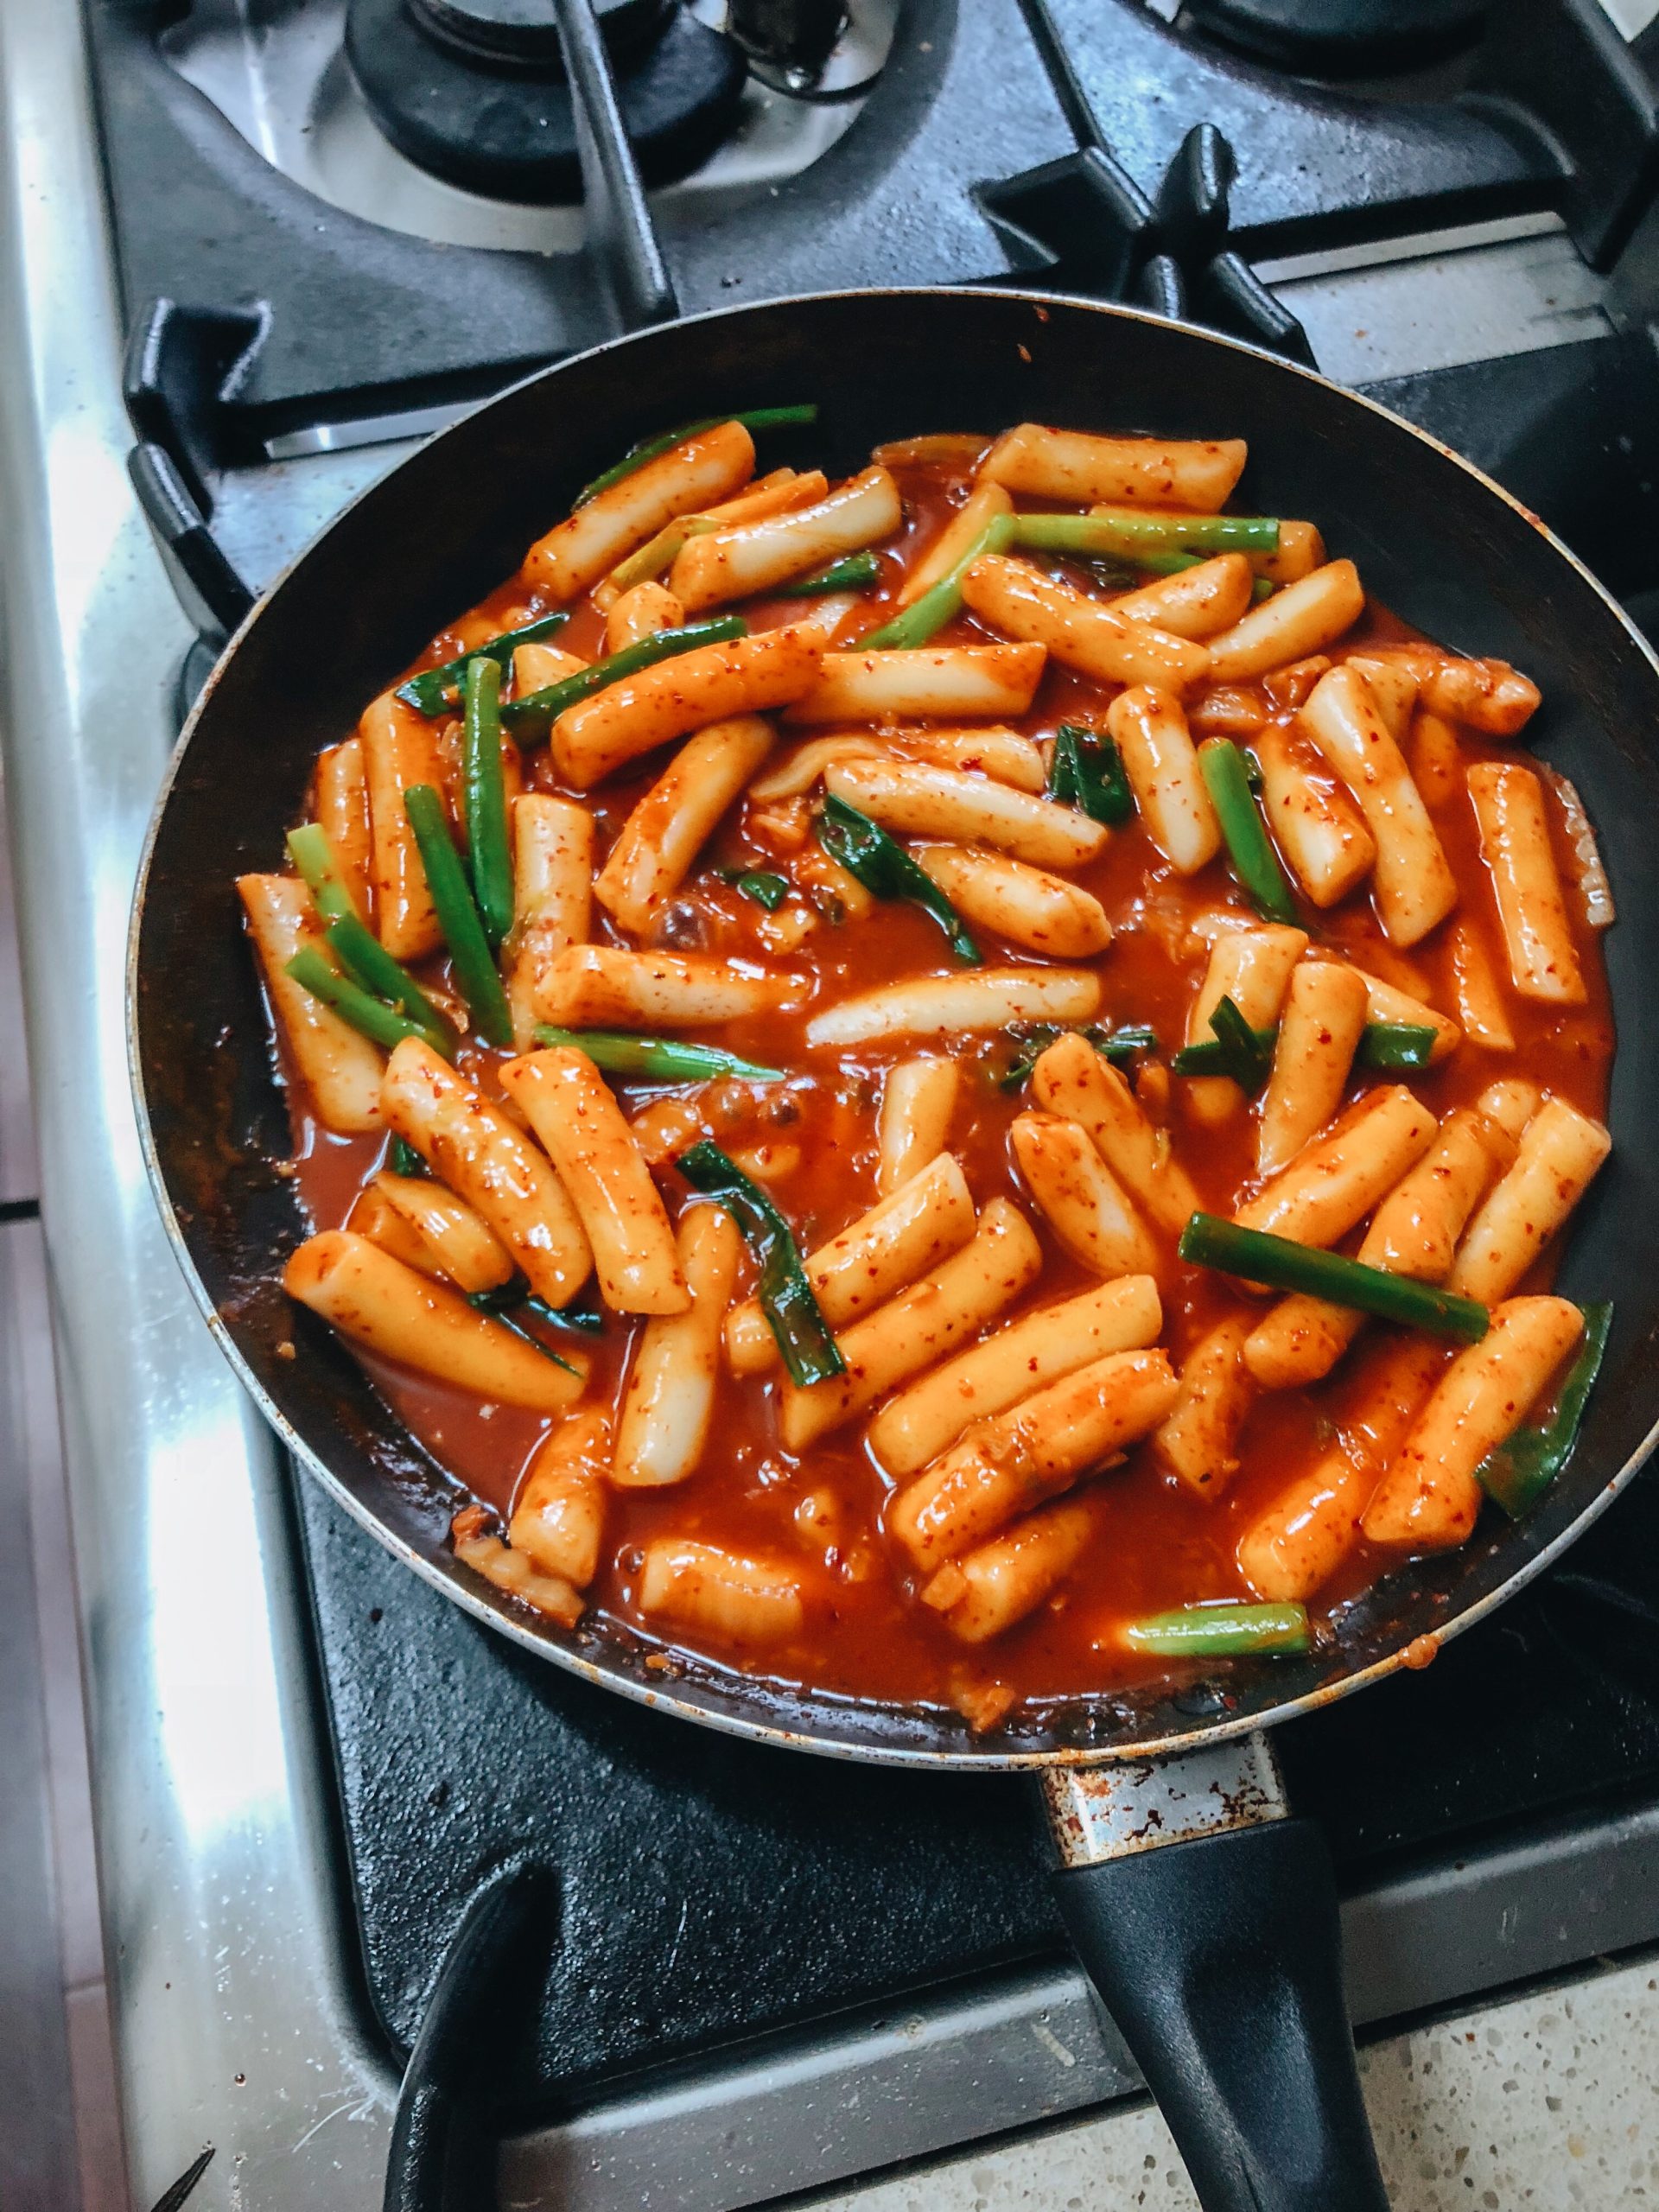 VEGAN TTEOKBOKKI RECIPE, Spicy Korean Rice Cakes